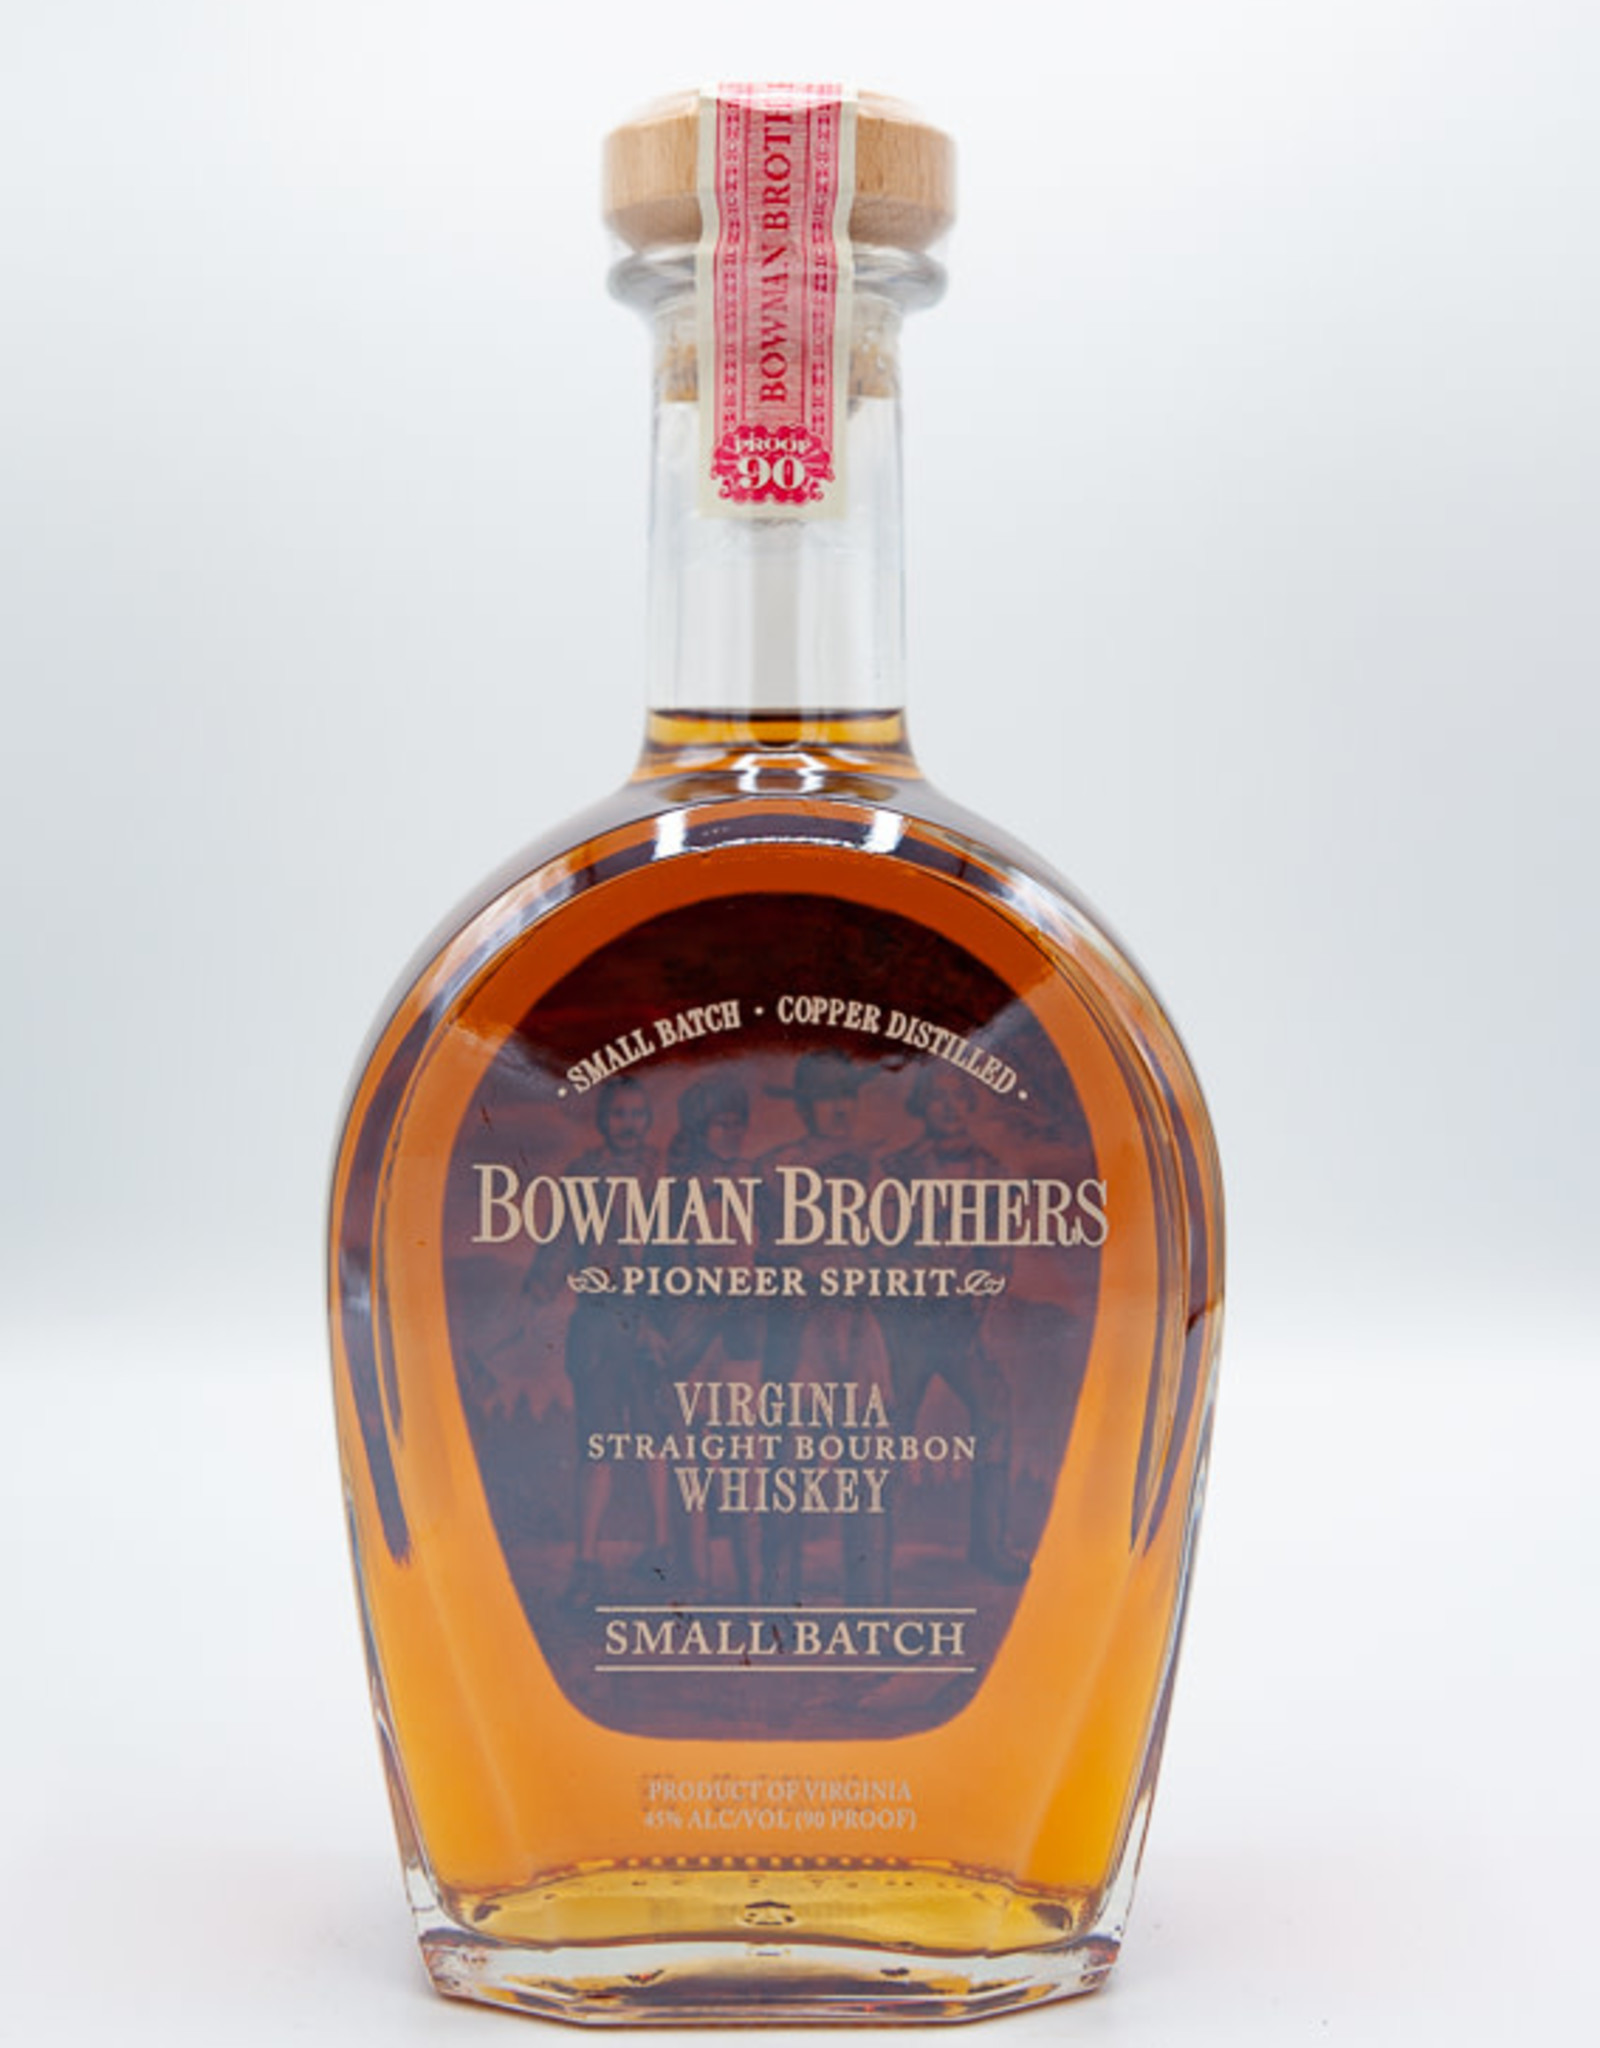 Bowman Bowman Brothers Small Batch Bourbon